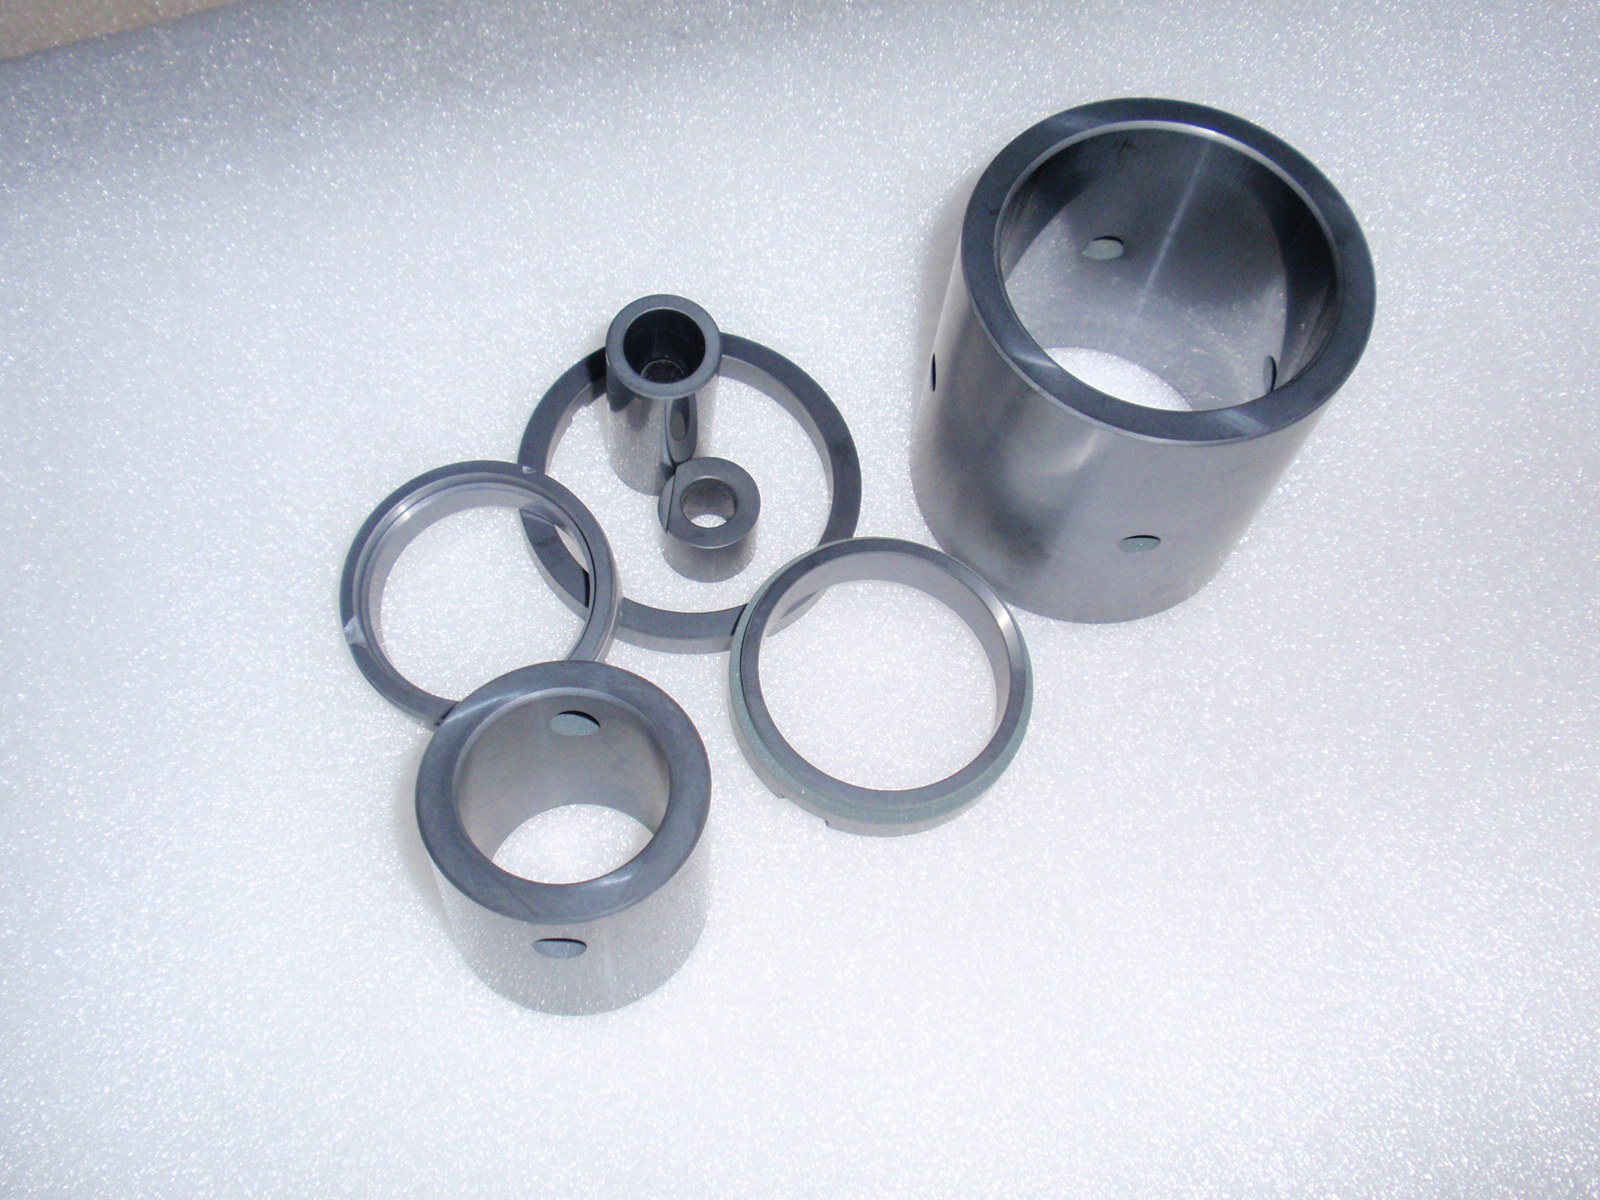 Silicon carbide ceramic rings